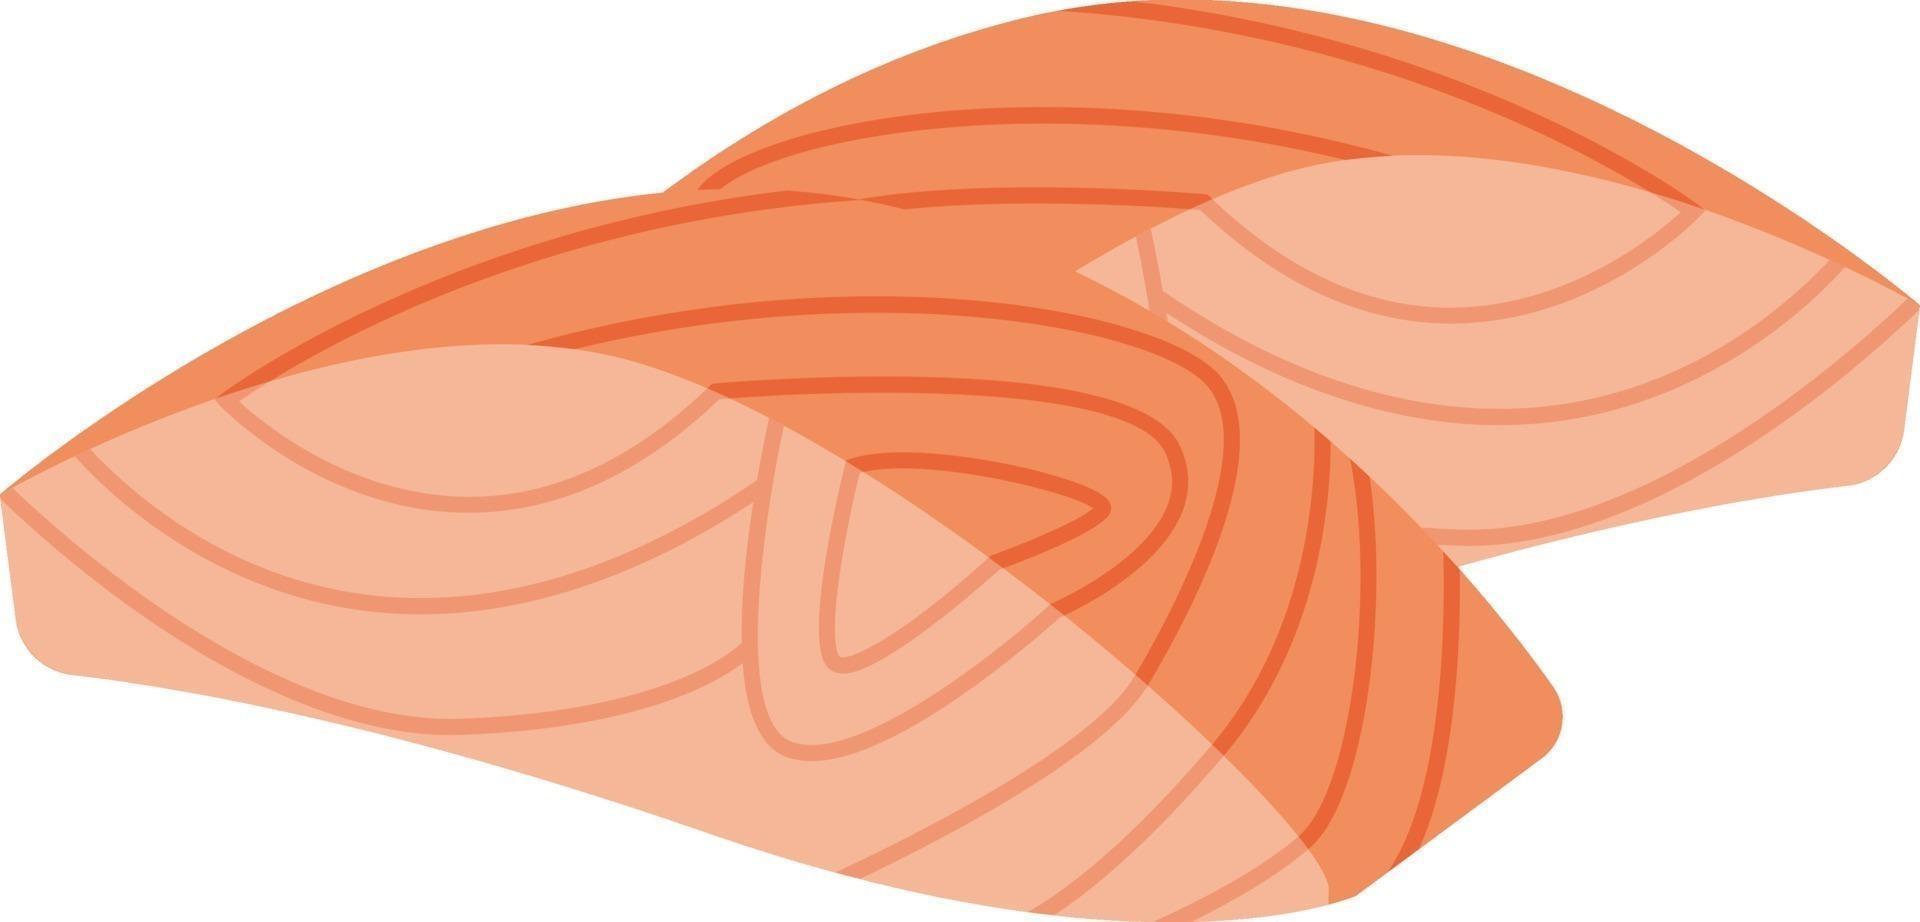 Fish filets, illustration, vector on white background